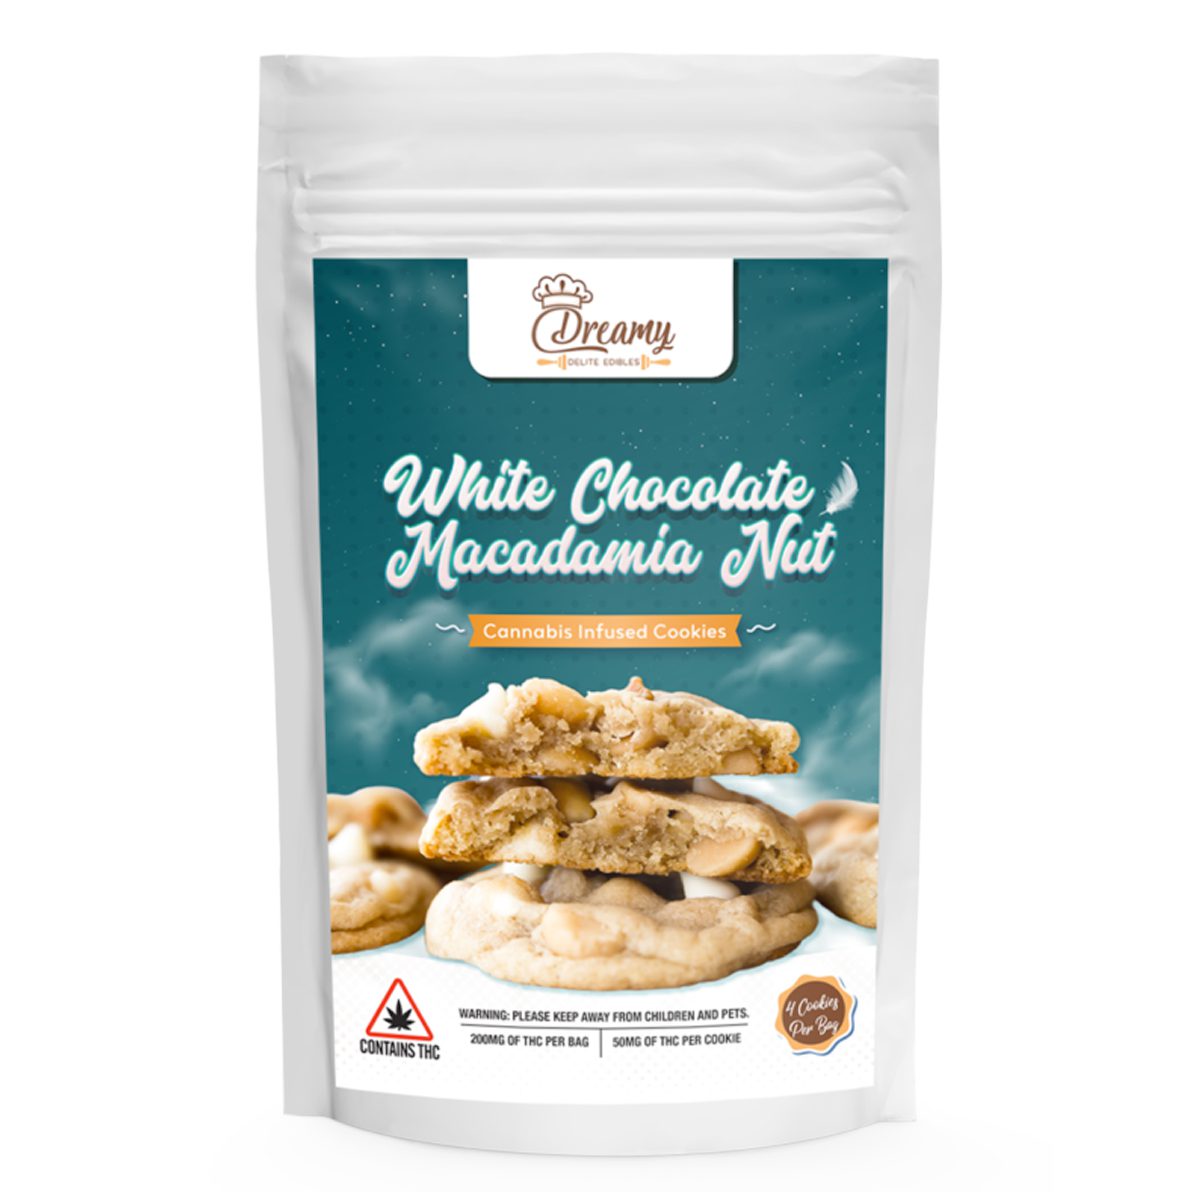 Dreamy Delite White Chocolate Macadamia Nut Canna Cookies – 200mg